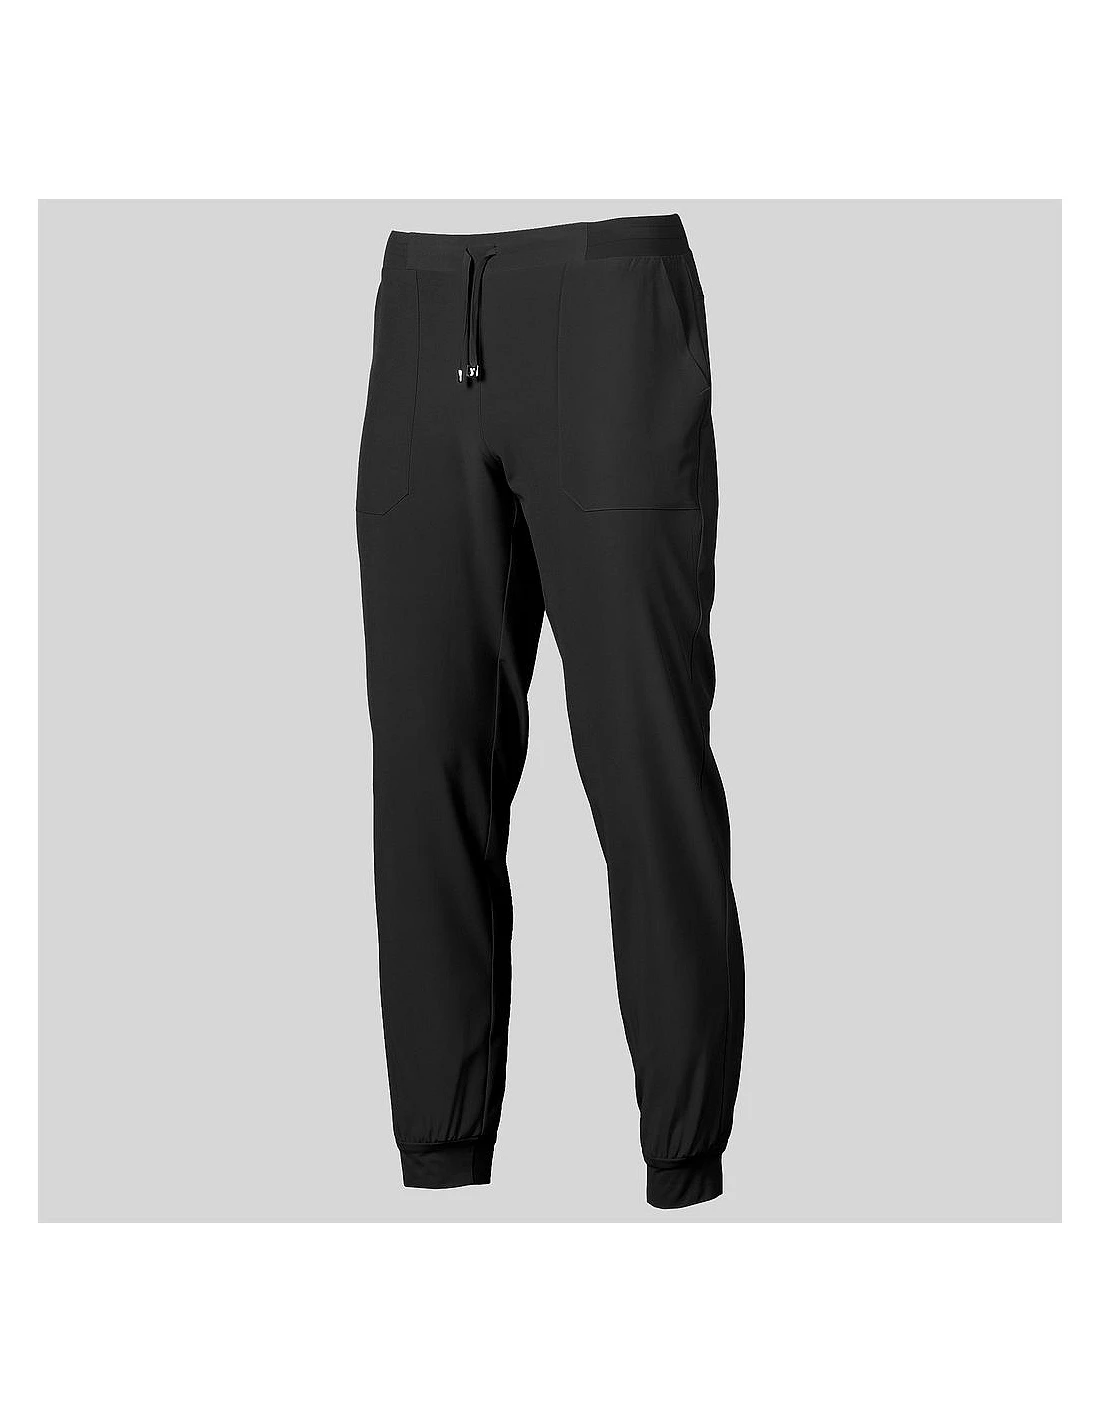 Pantalón deportivo para mujer con bolsillos, cintura elástica con cordón  elástico, pantalones deportivos térmicos para mujer, pantalones casuales  para